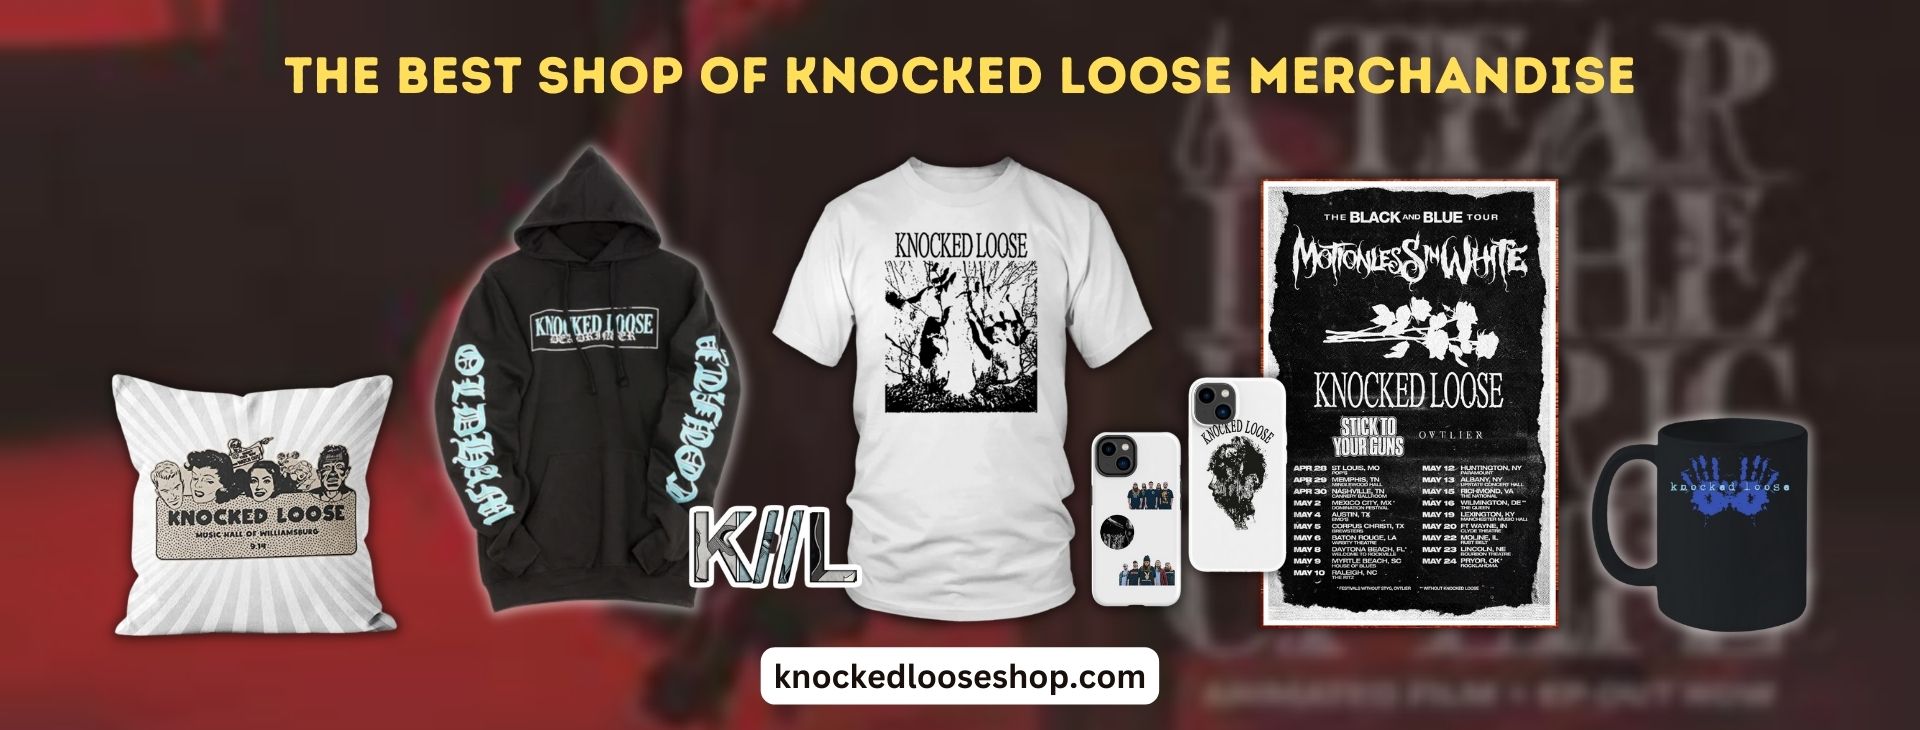 Knocked Loose Banner - Knocked Loose Shop